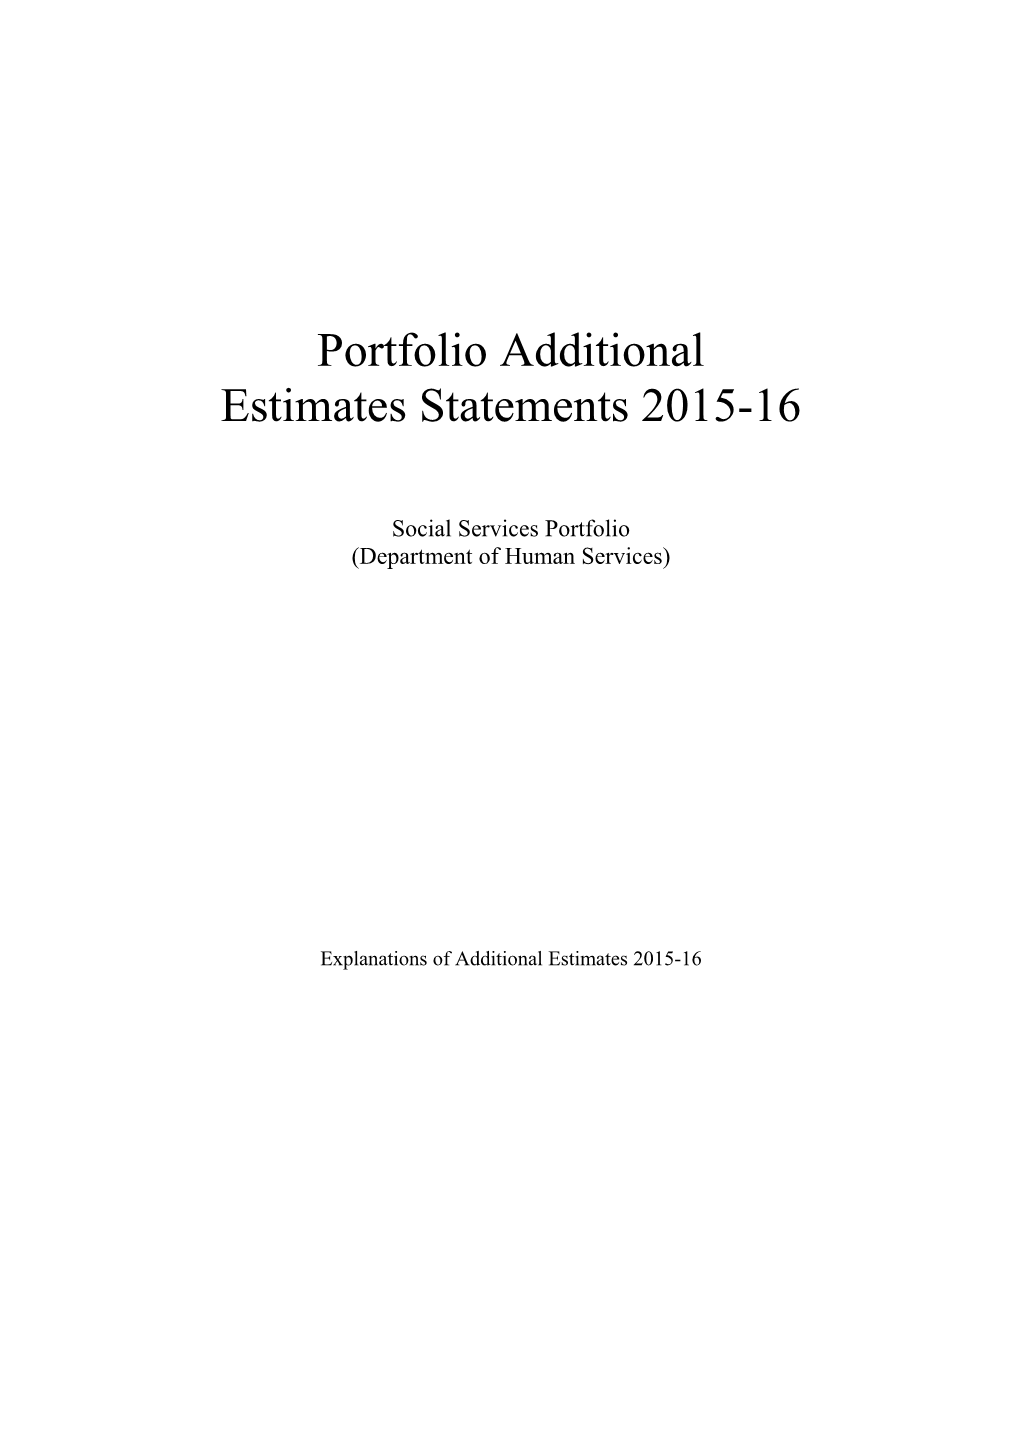 Portfolio Additional Estimates Statements 2015-16 Social Services Portfolio (Department